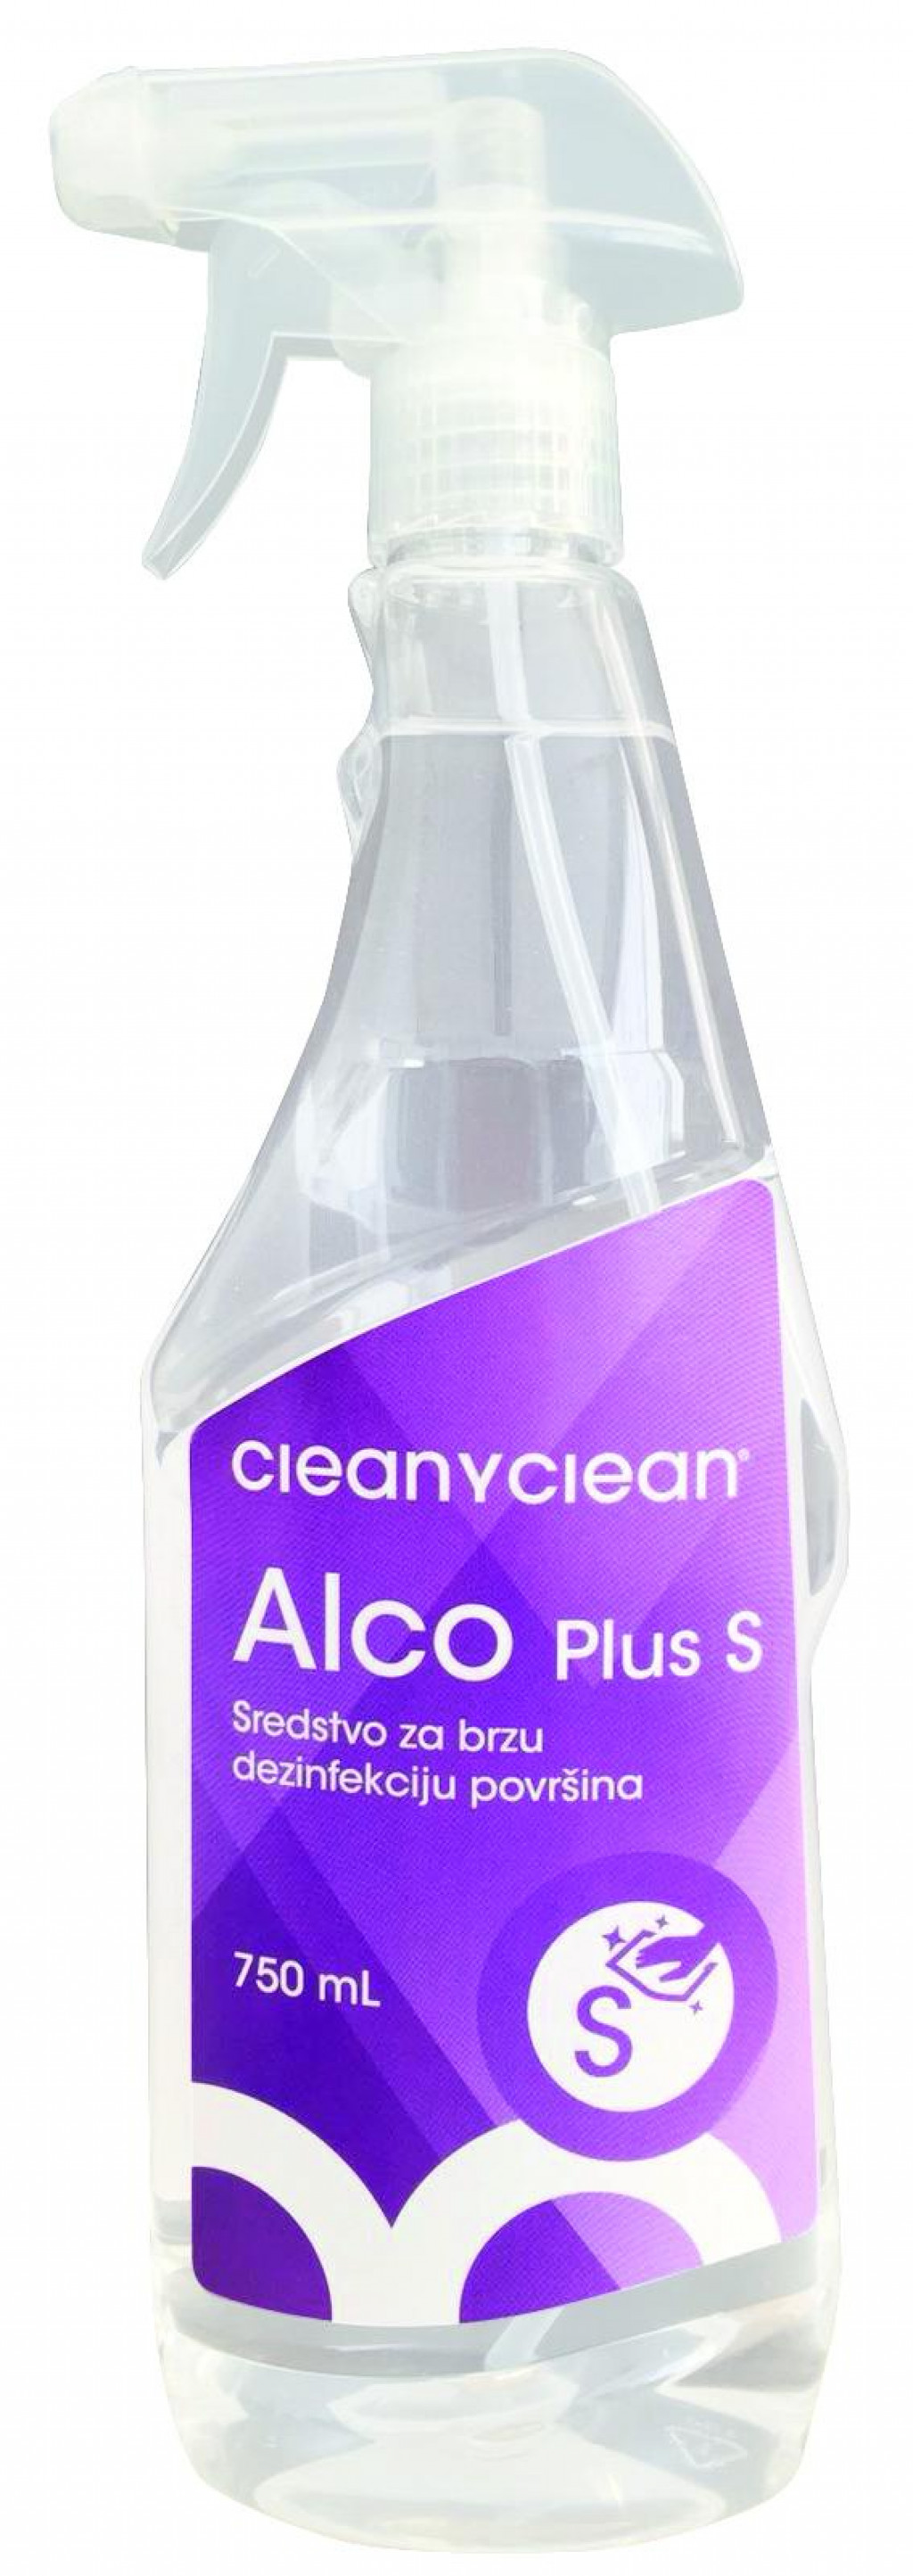 Ivero Cleanyclean Alco Plus S